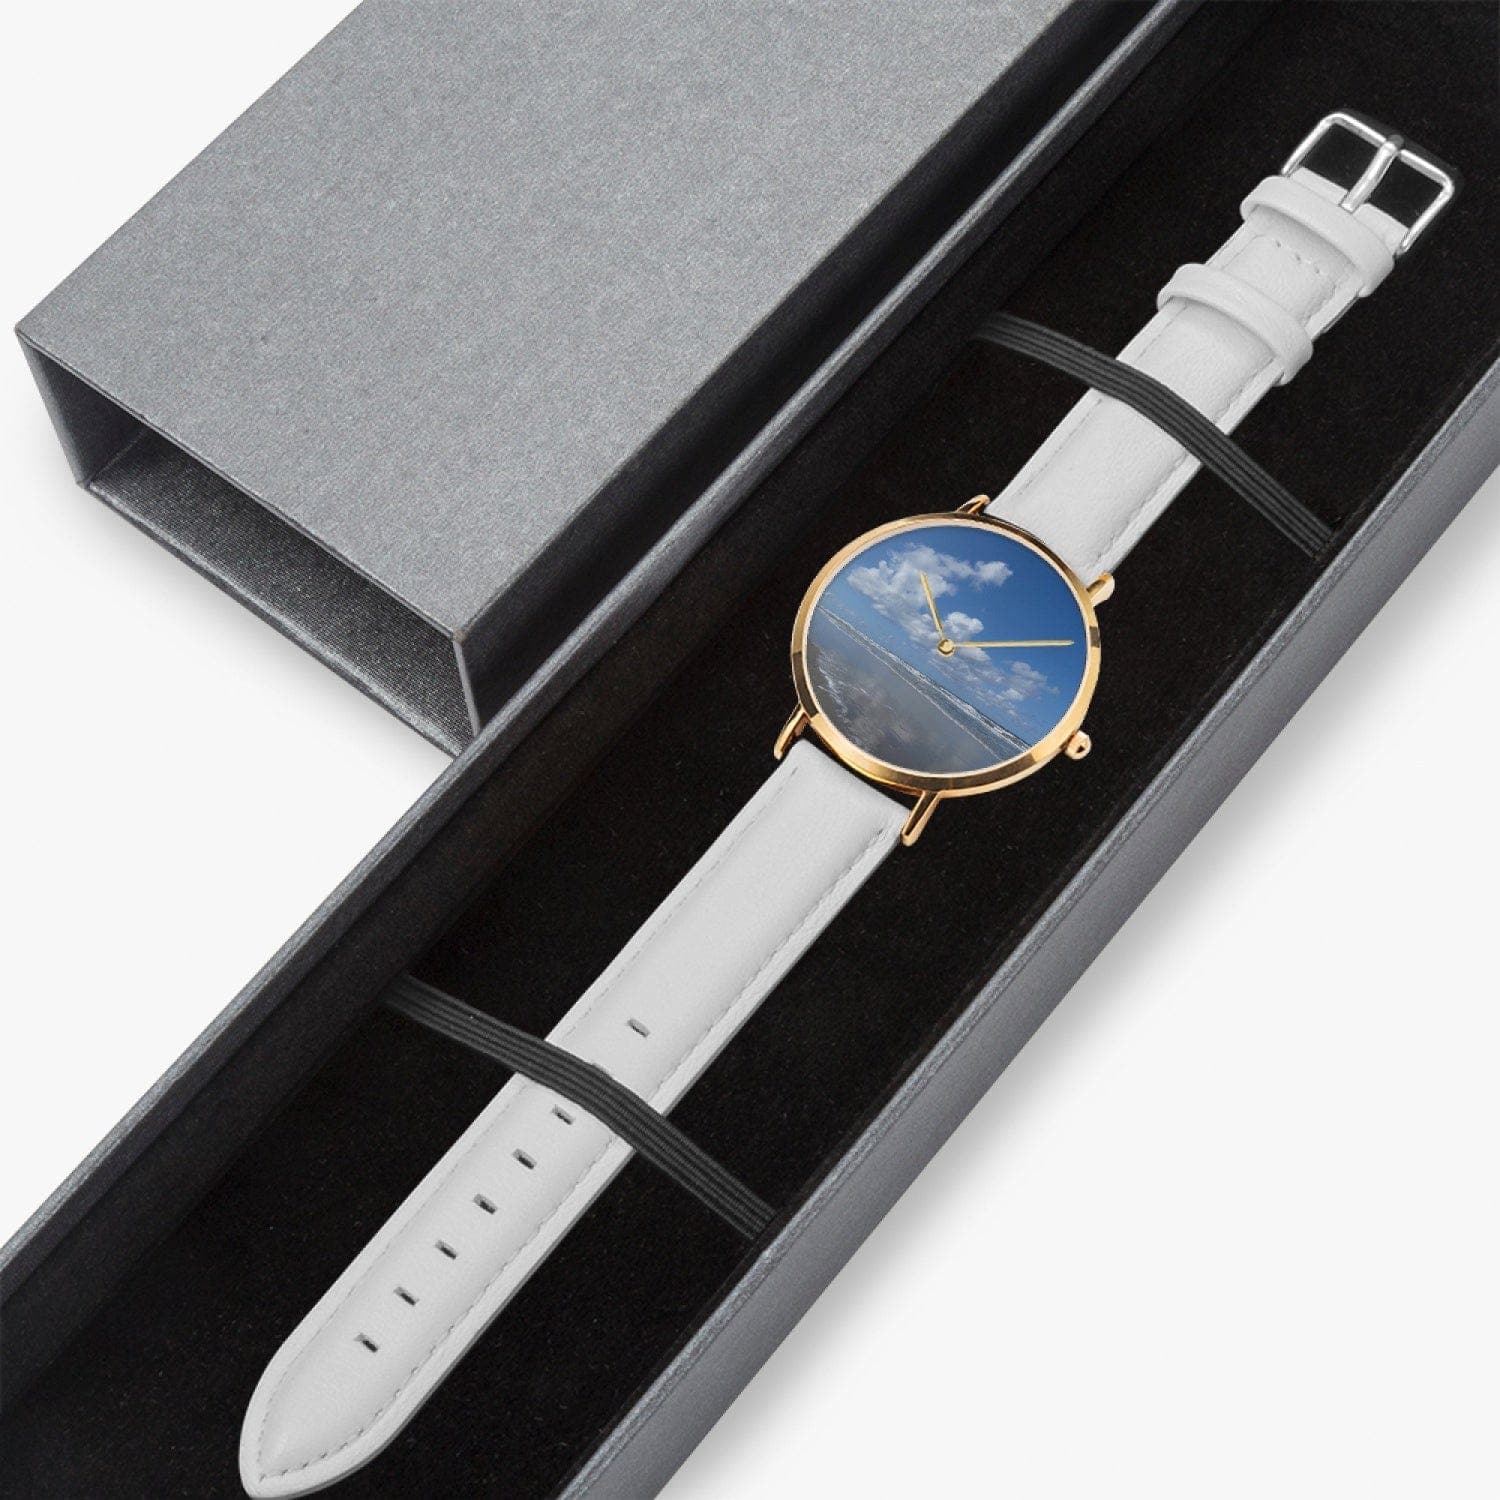 Summer Beach. Hot Selling Ultra-Thin Leather Strap Quartz Watch (Rose Gold) Designer watch by Sensus Studio